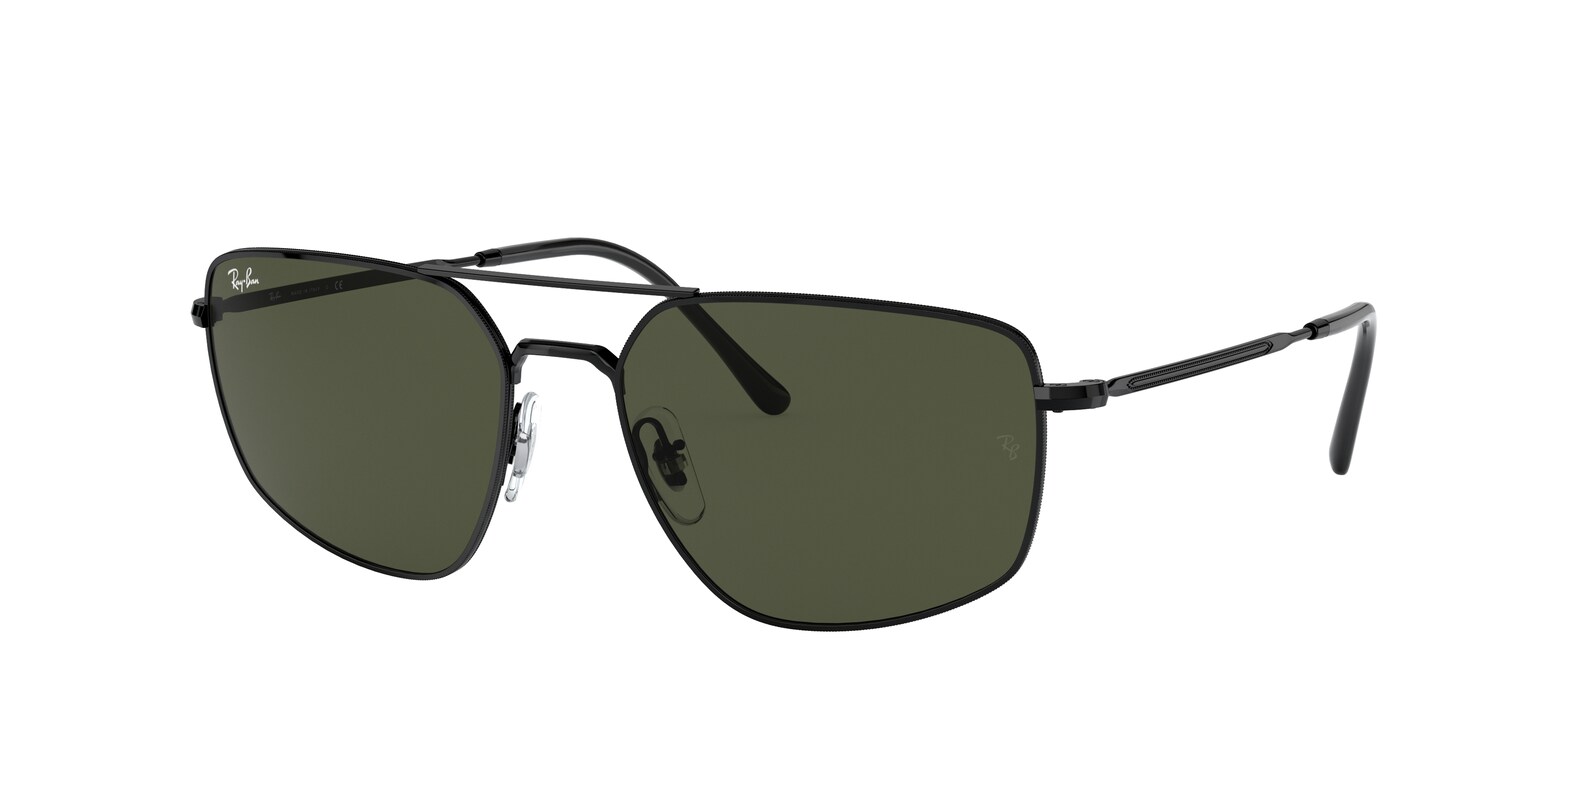 EZContacts Extra 38% Off Ray-Ban Frames, Glasses, & Sunglasses: Erika Women's Sunglasses (Red Velvet) $58.60, Chris Men's Sunglasses (Blue on Black) $60.76 & More + Free Shipping